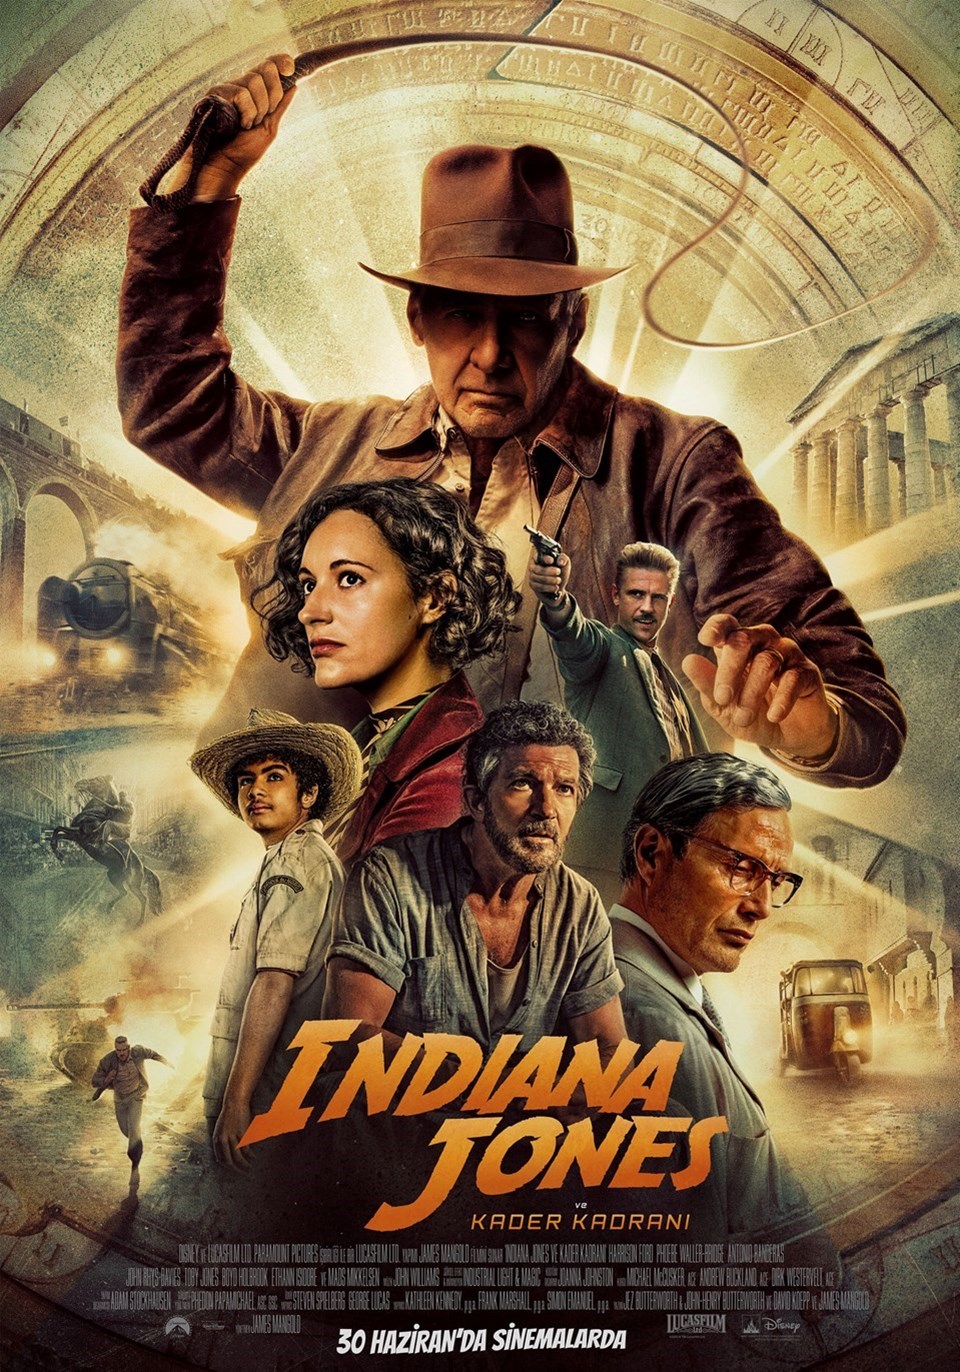 Son Indiana Jones filmi milyonlarca dolar kaybettirdi - 1